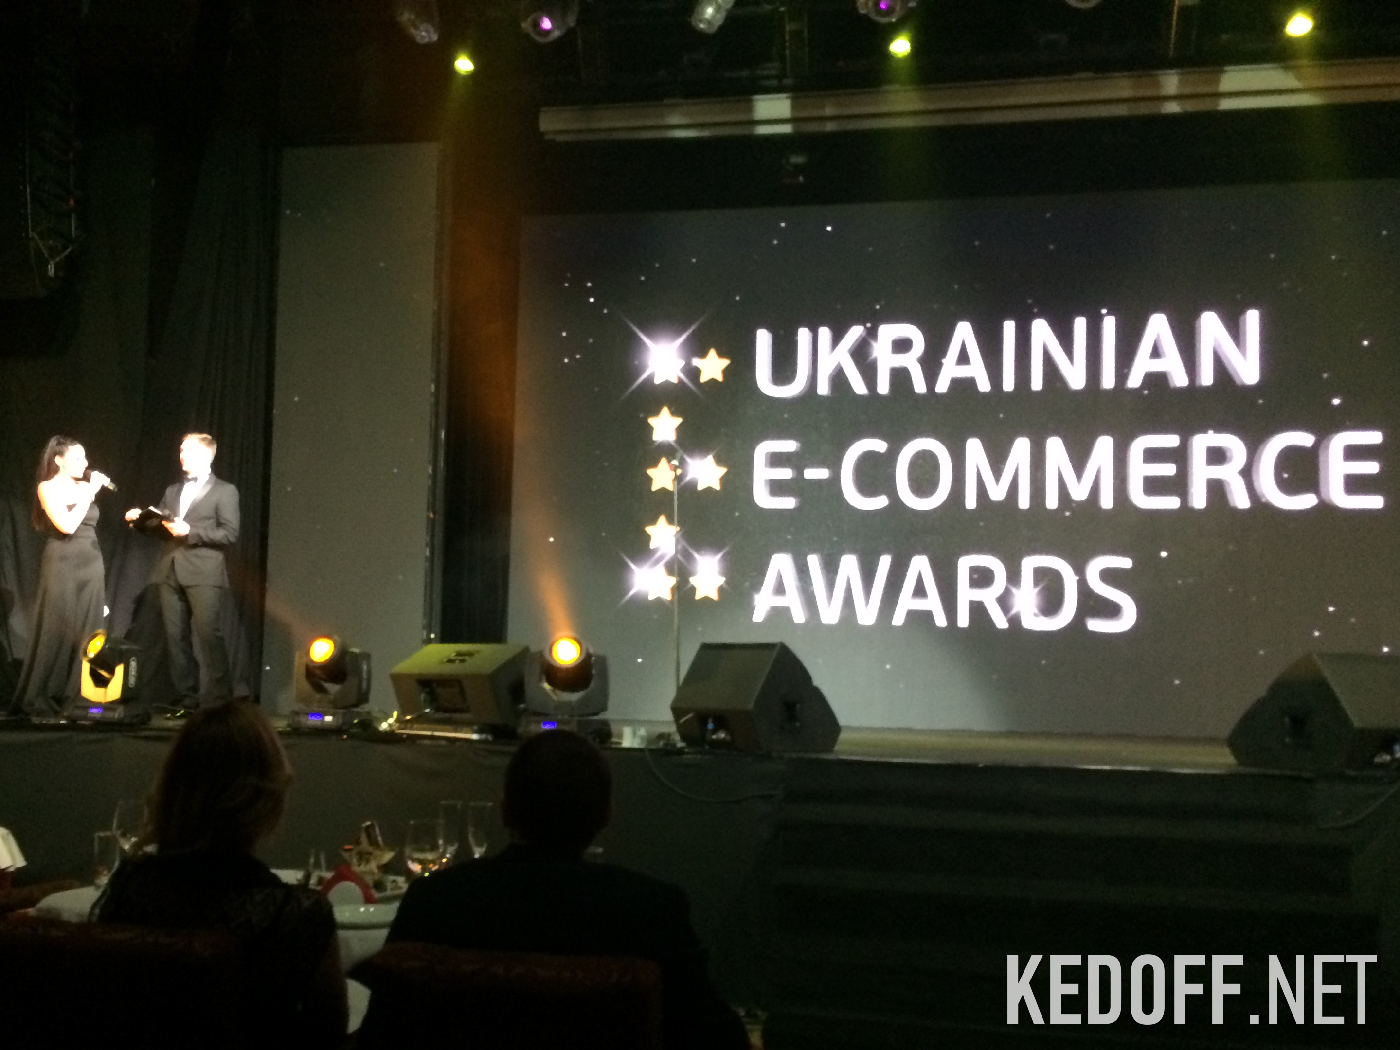 online shoes store Kedoff.net Ukrainian E-commerce Awards 2016